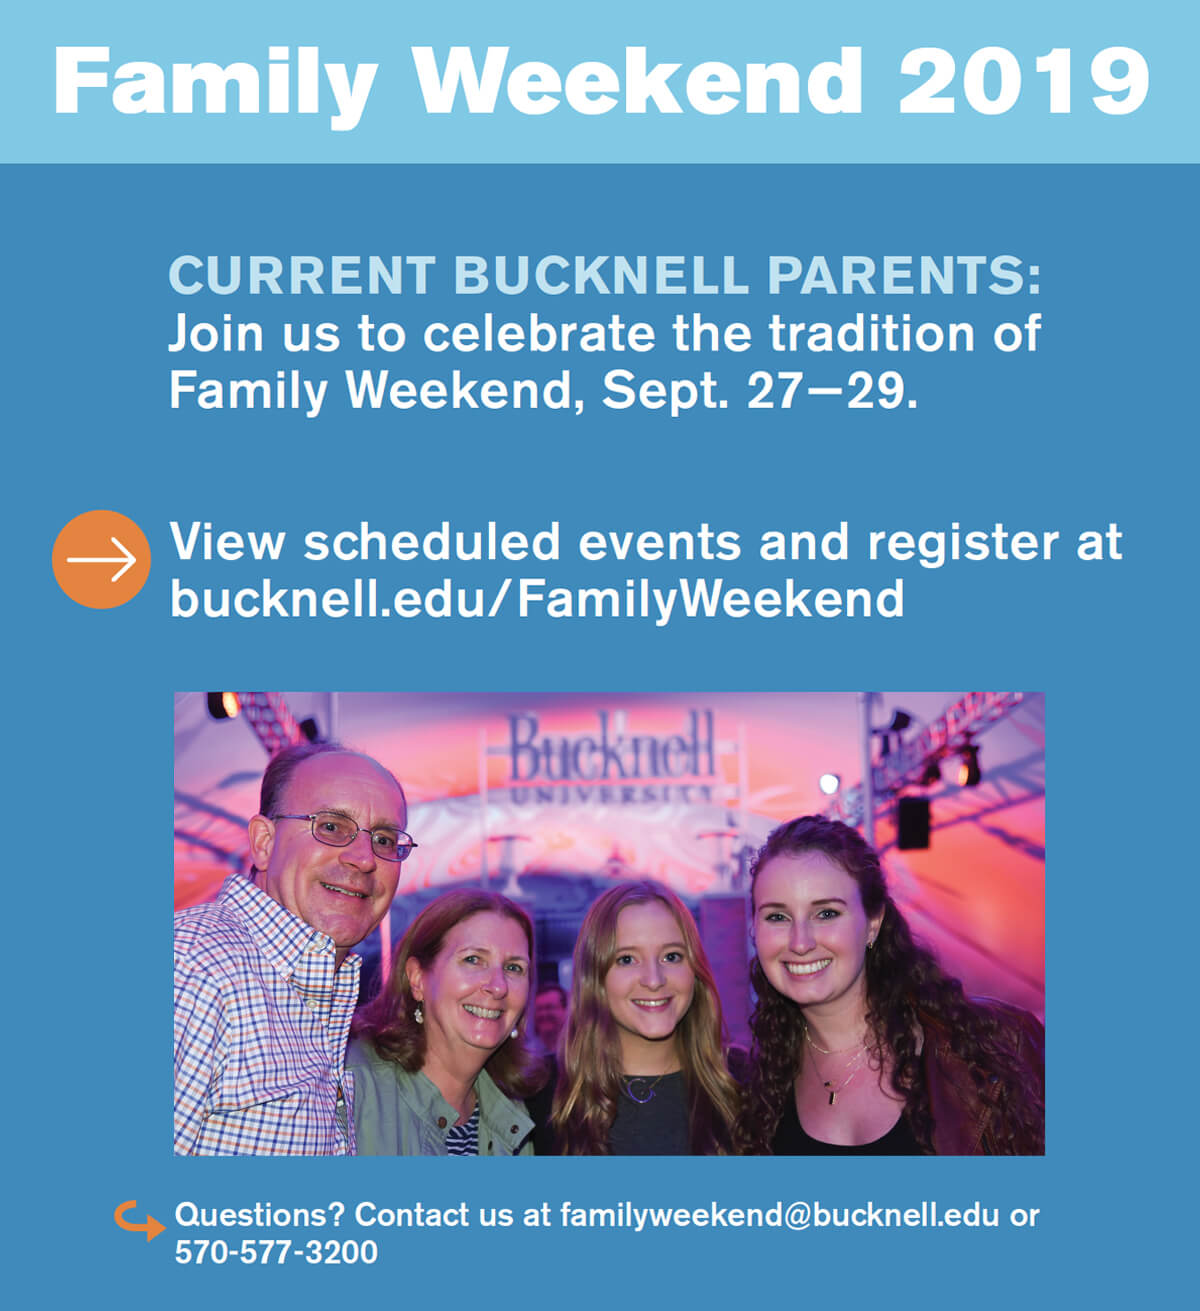 Family Weekend 2019 Bucknell Advertisement